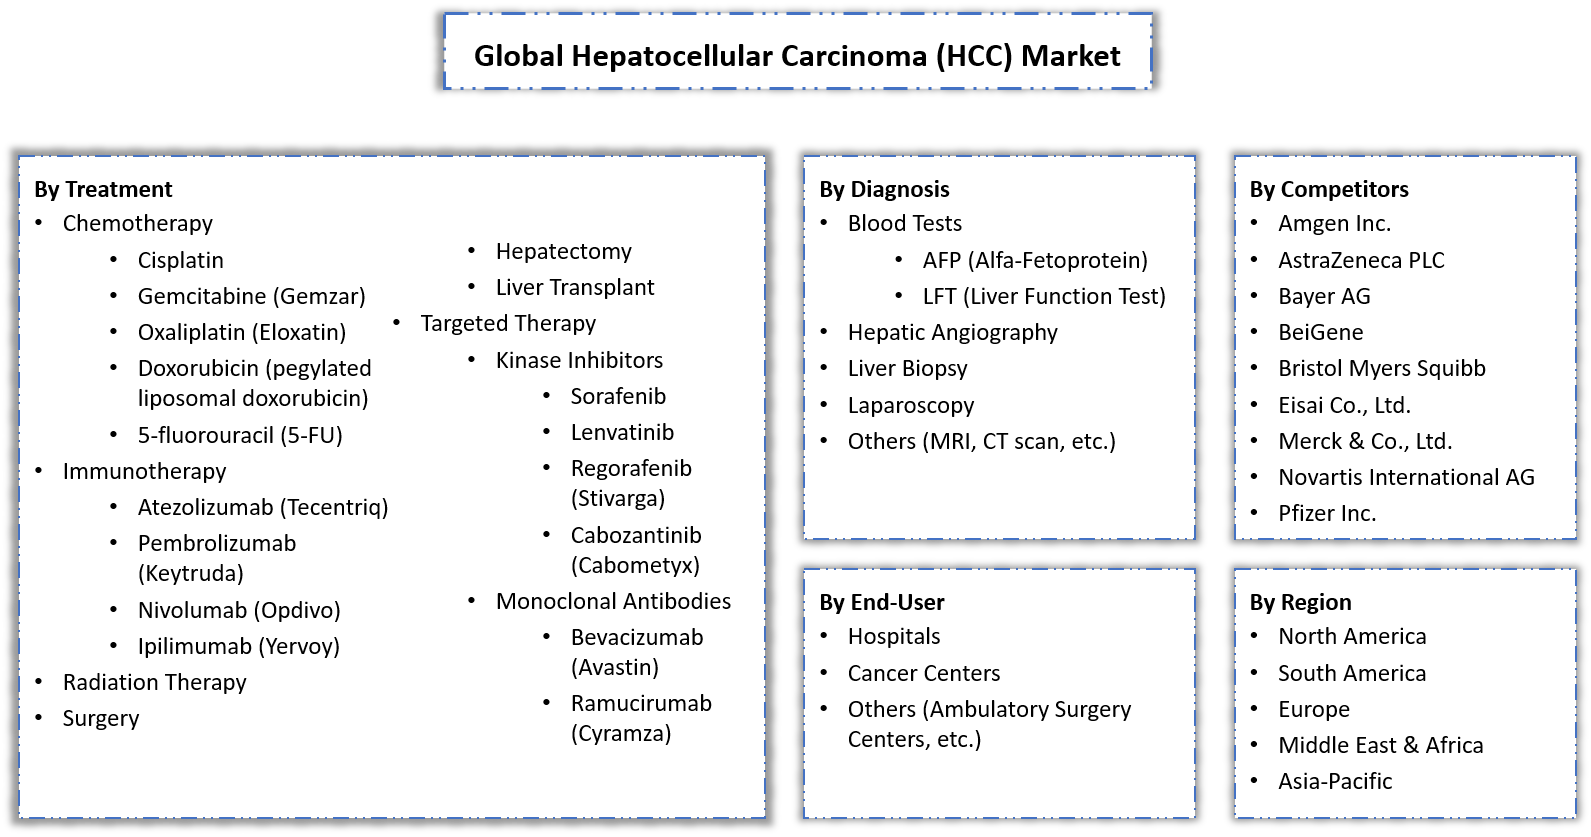  Hepatocellular Carcinoma (HCC) Market Segmentation